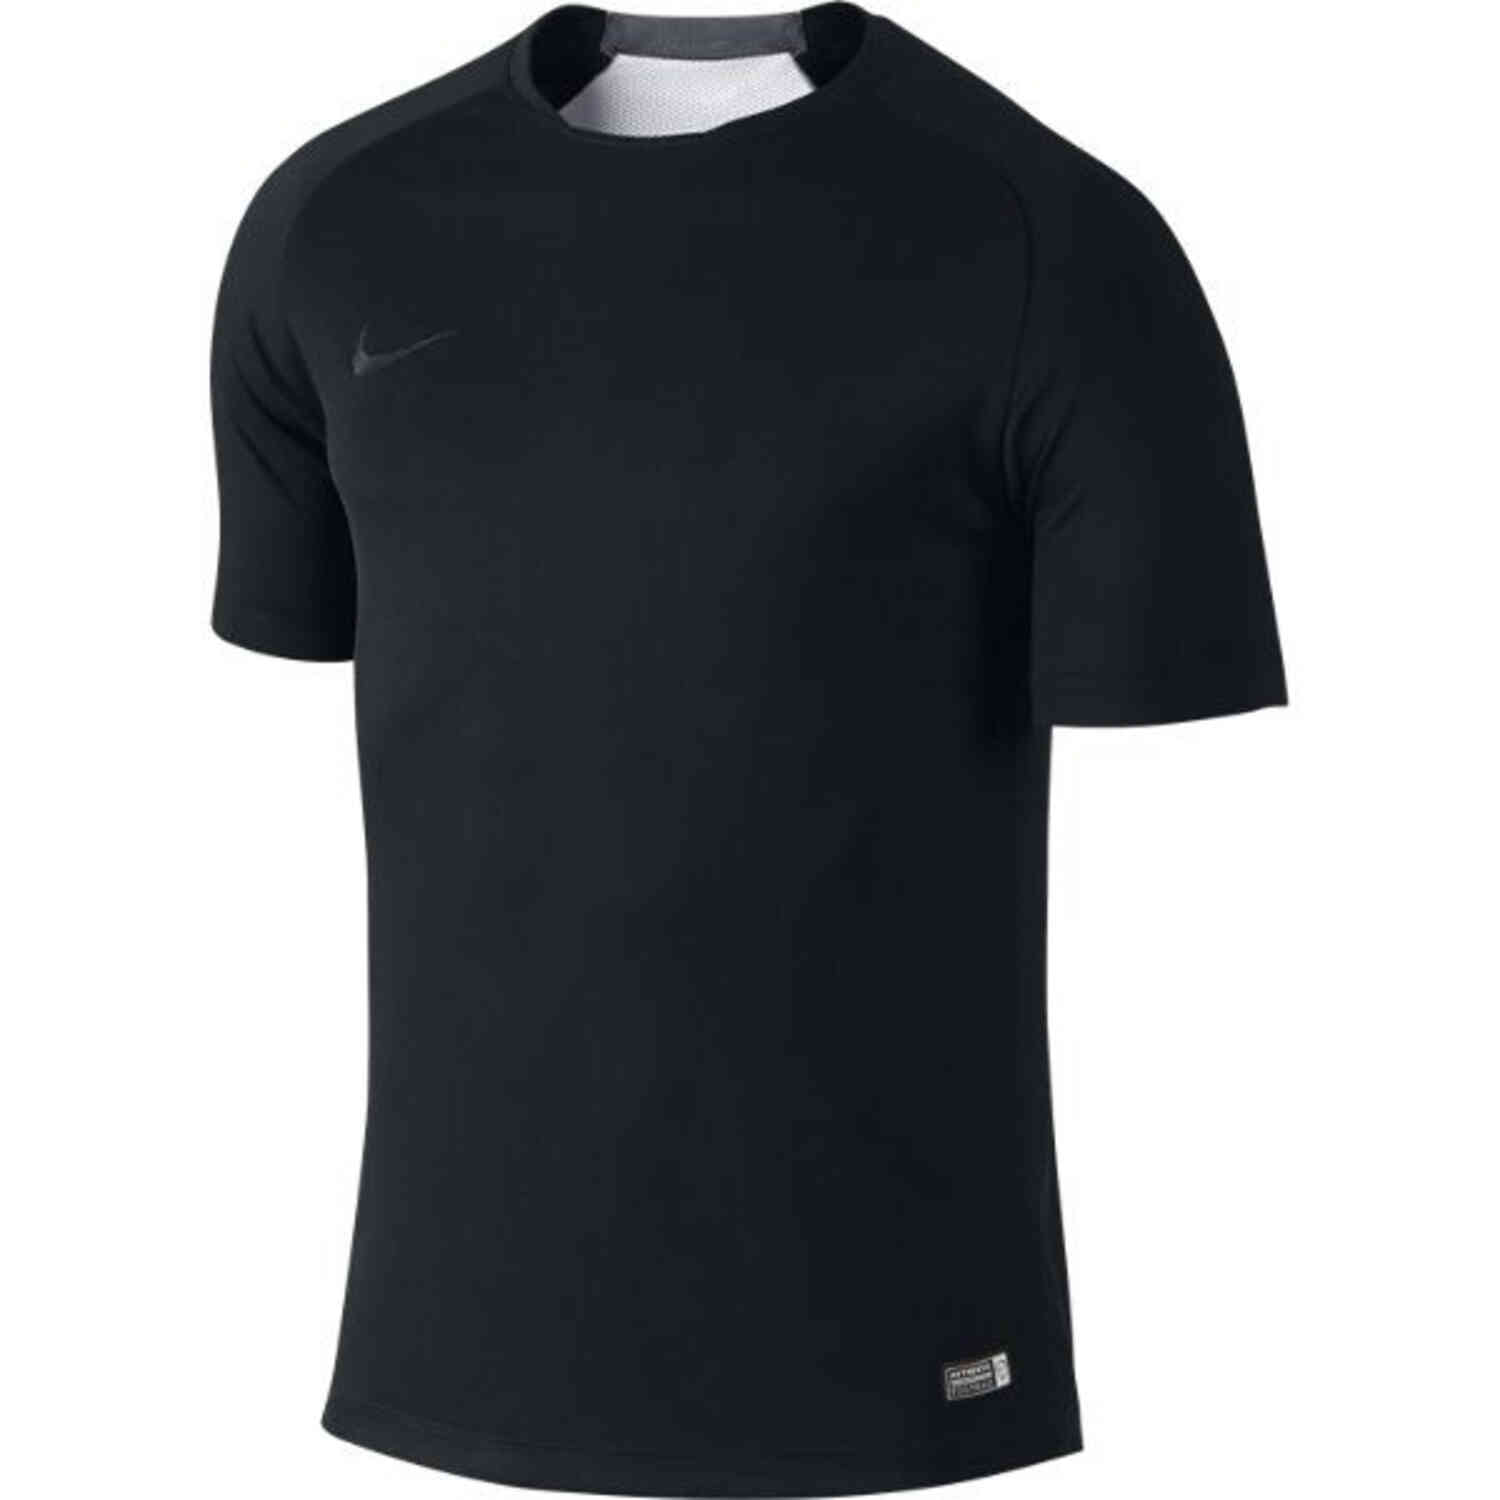 GPX Training Top 2 - Nike Soccer Training Jerseys